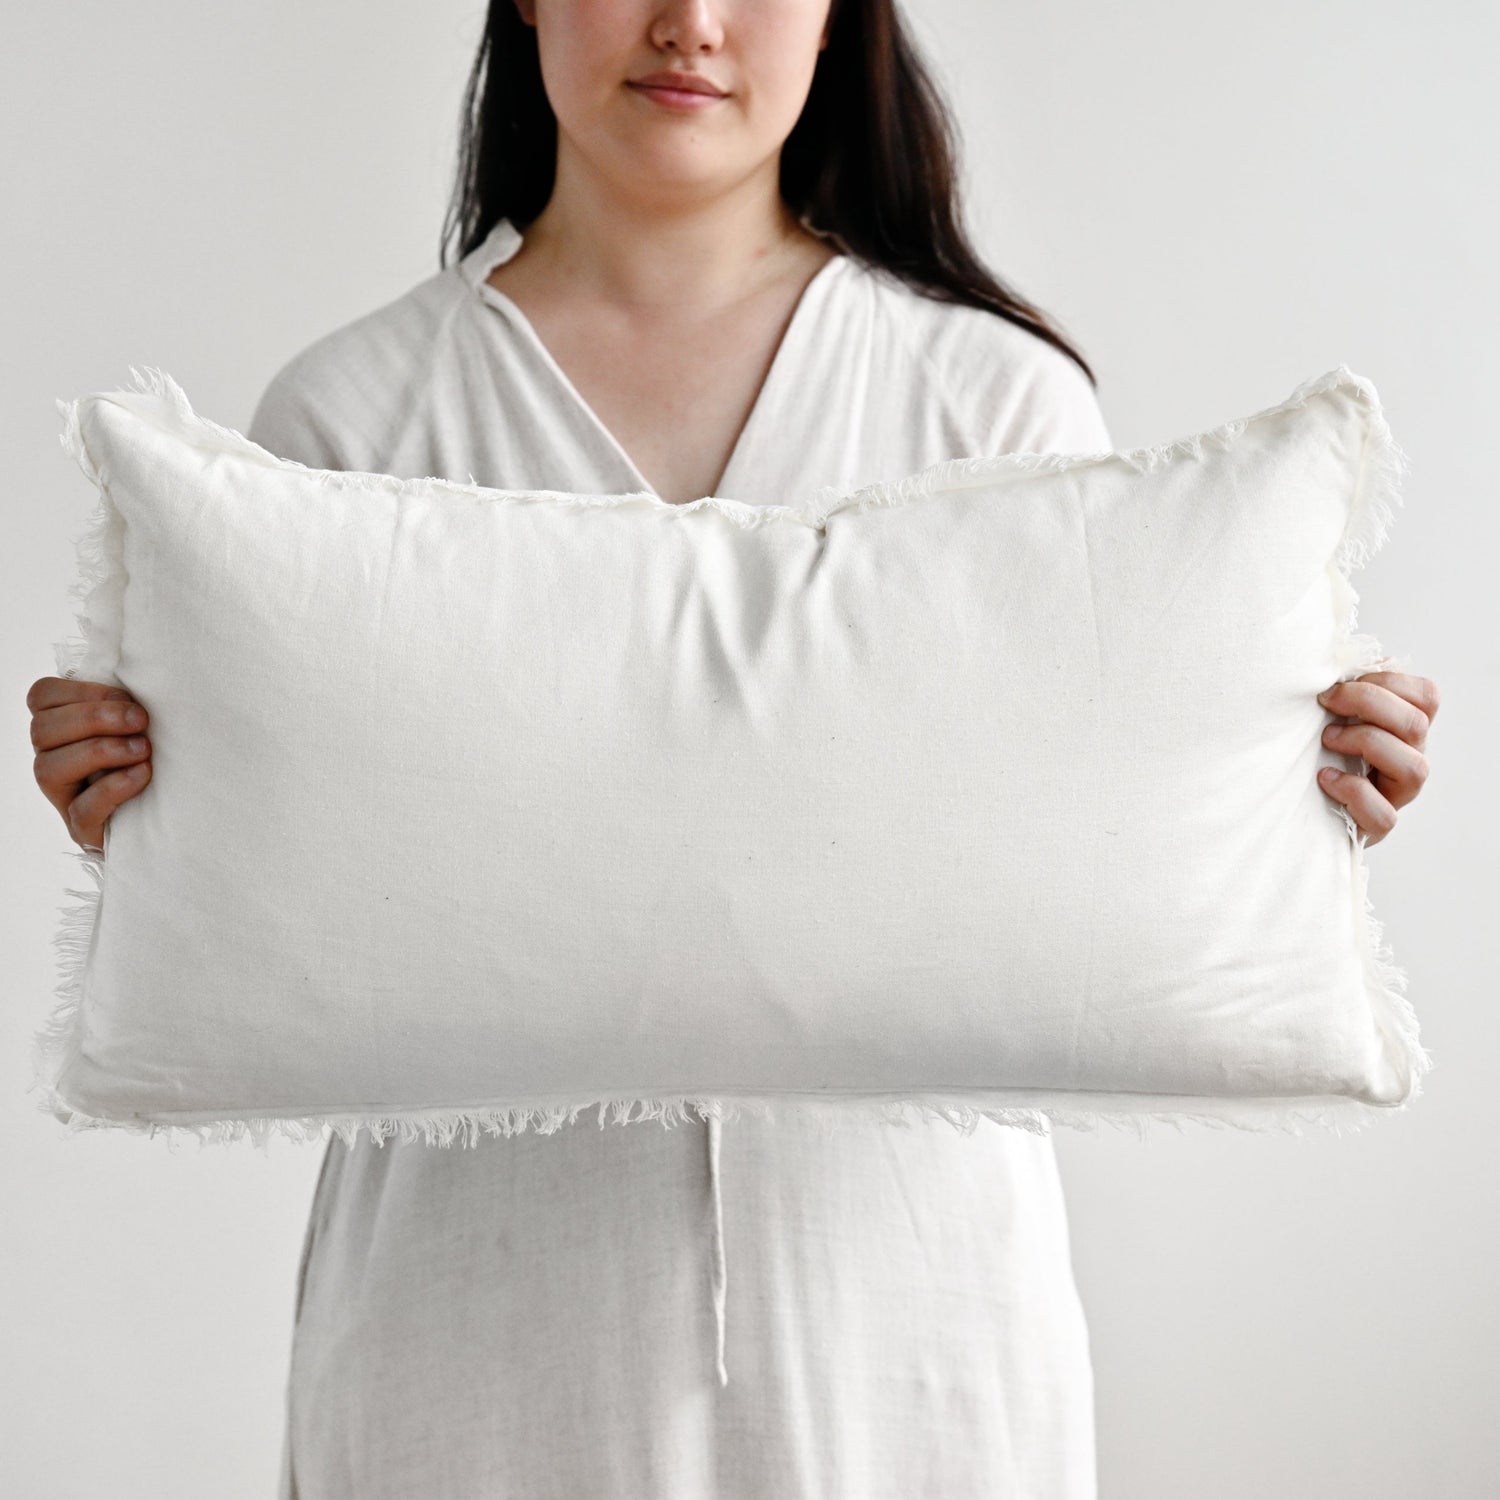 White Freya Linen Cushion 60cm x 35cm